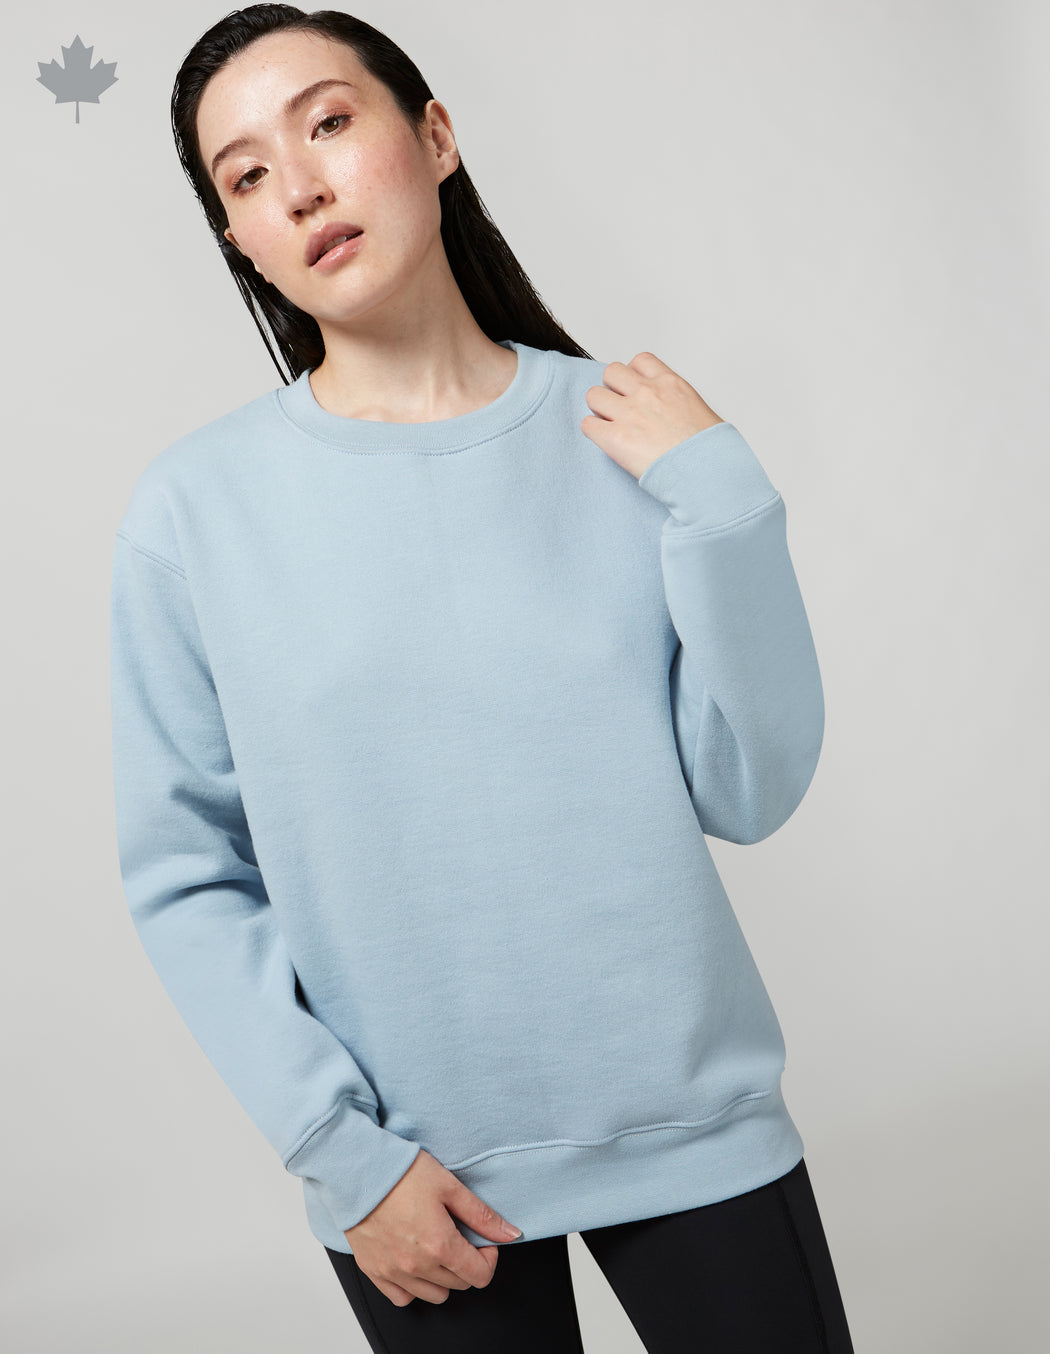 Women's Solid RELAX Sweatshirt - Made in Canada